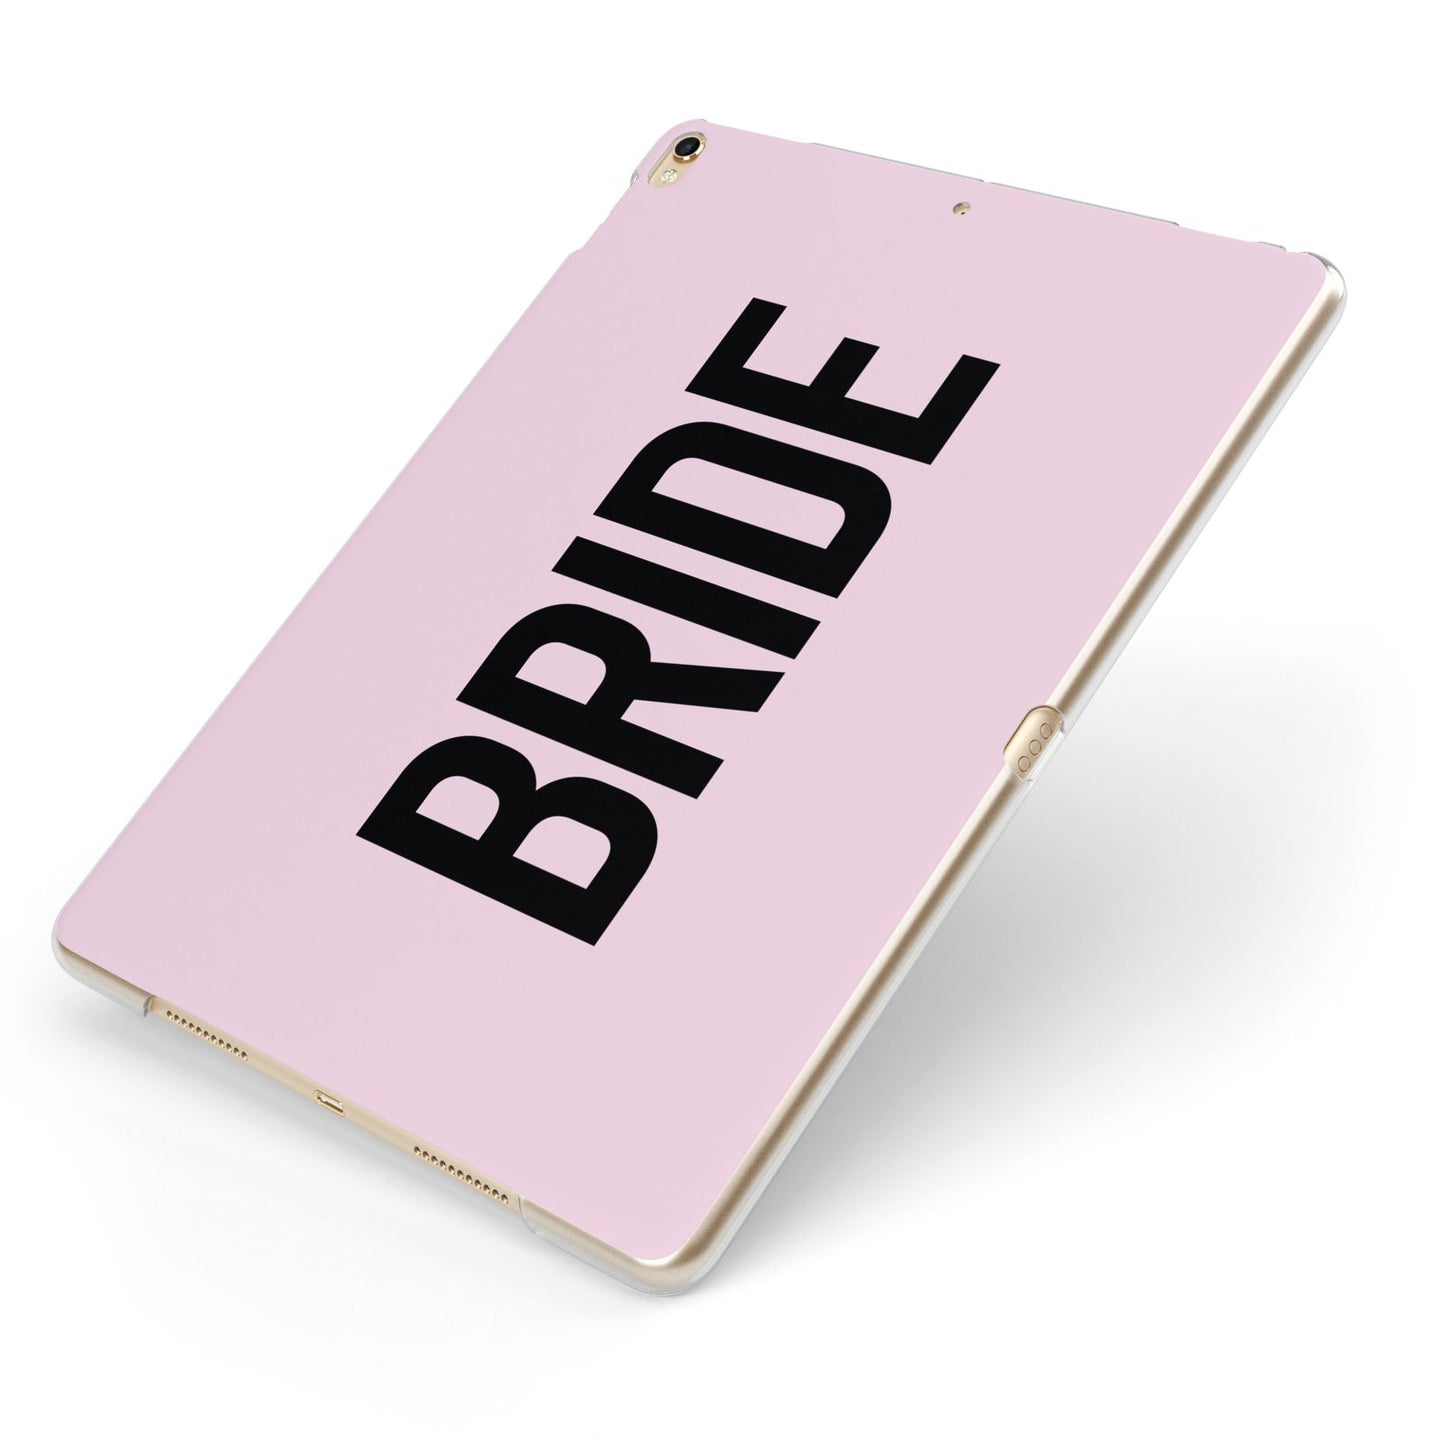 Bride Apple iPad Case on Gold iPad Side View